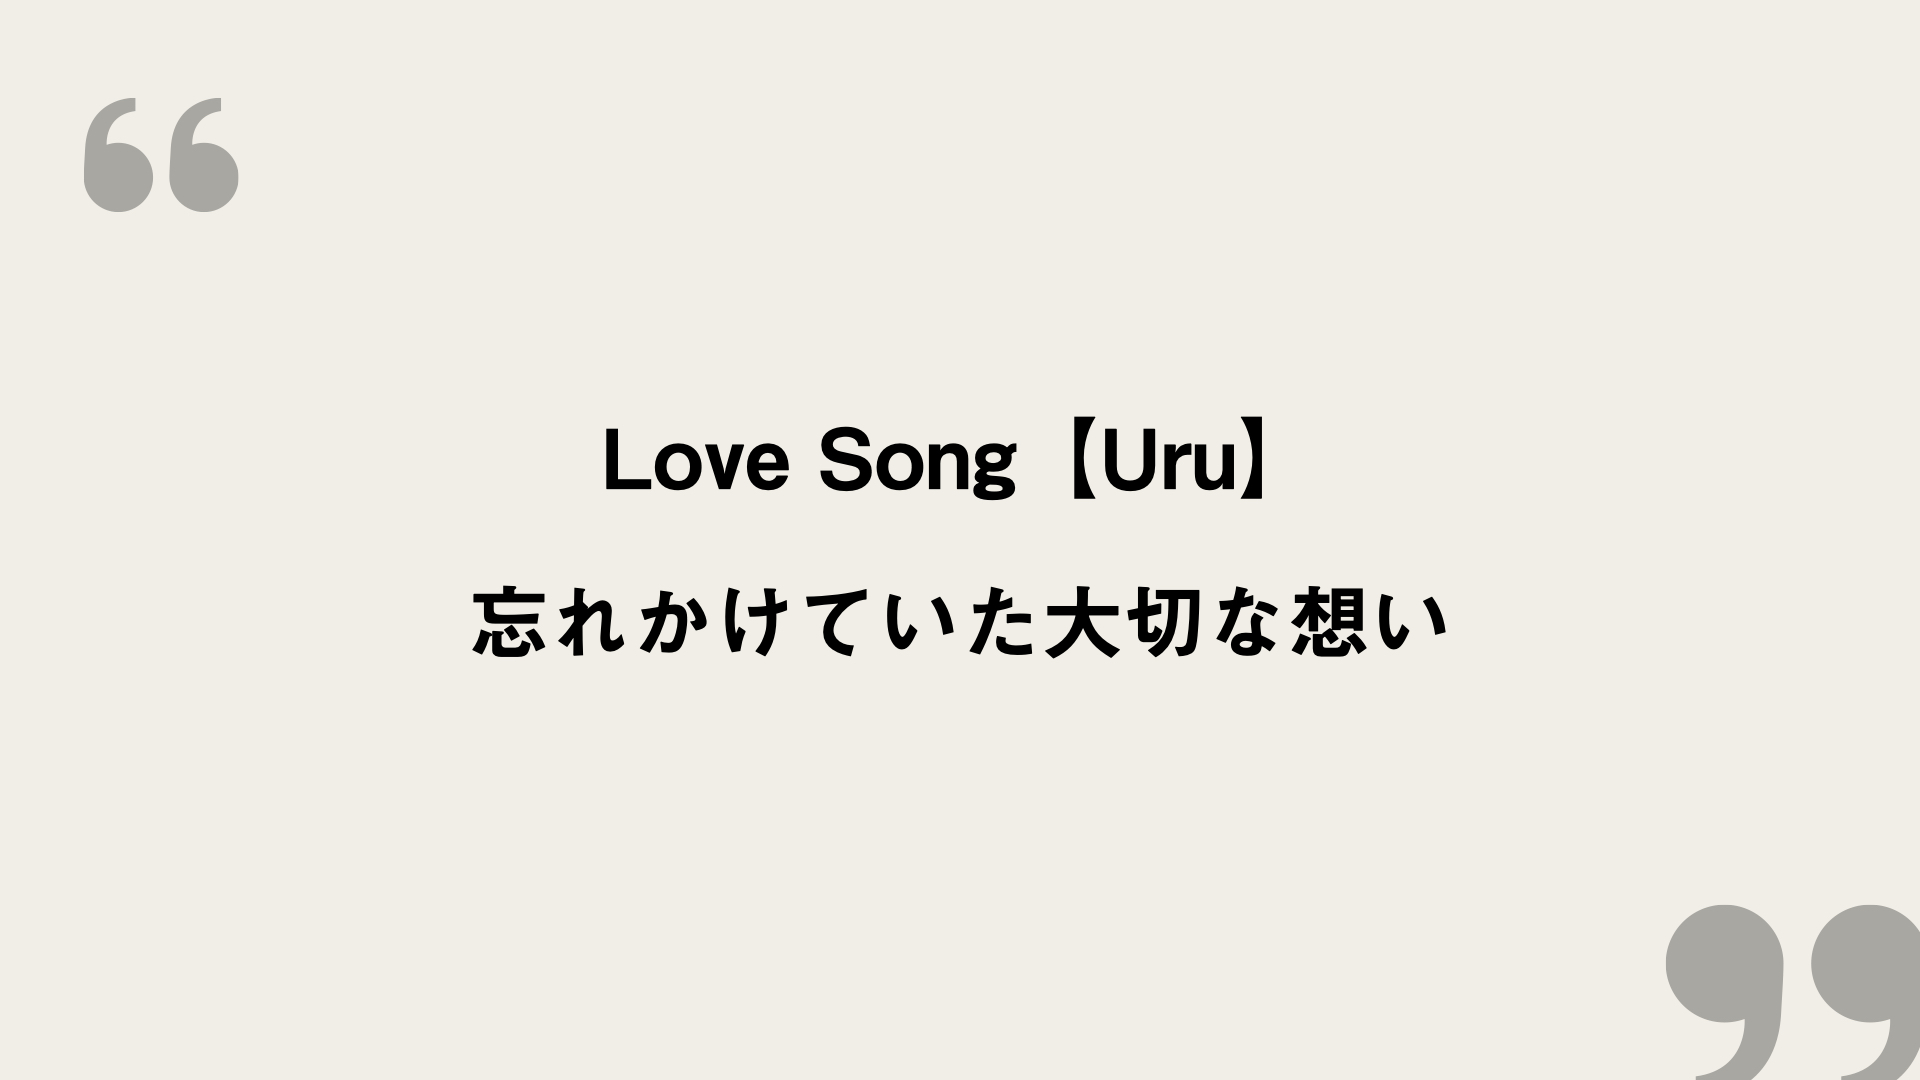 Love Song Uru 歌詞の意味を考察 忘れかけていた大切な想い Framu Media